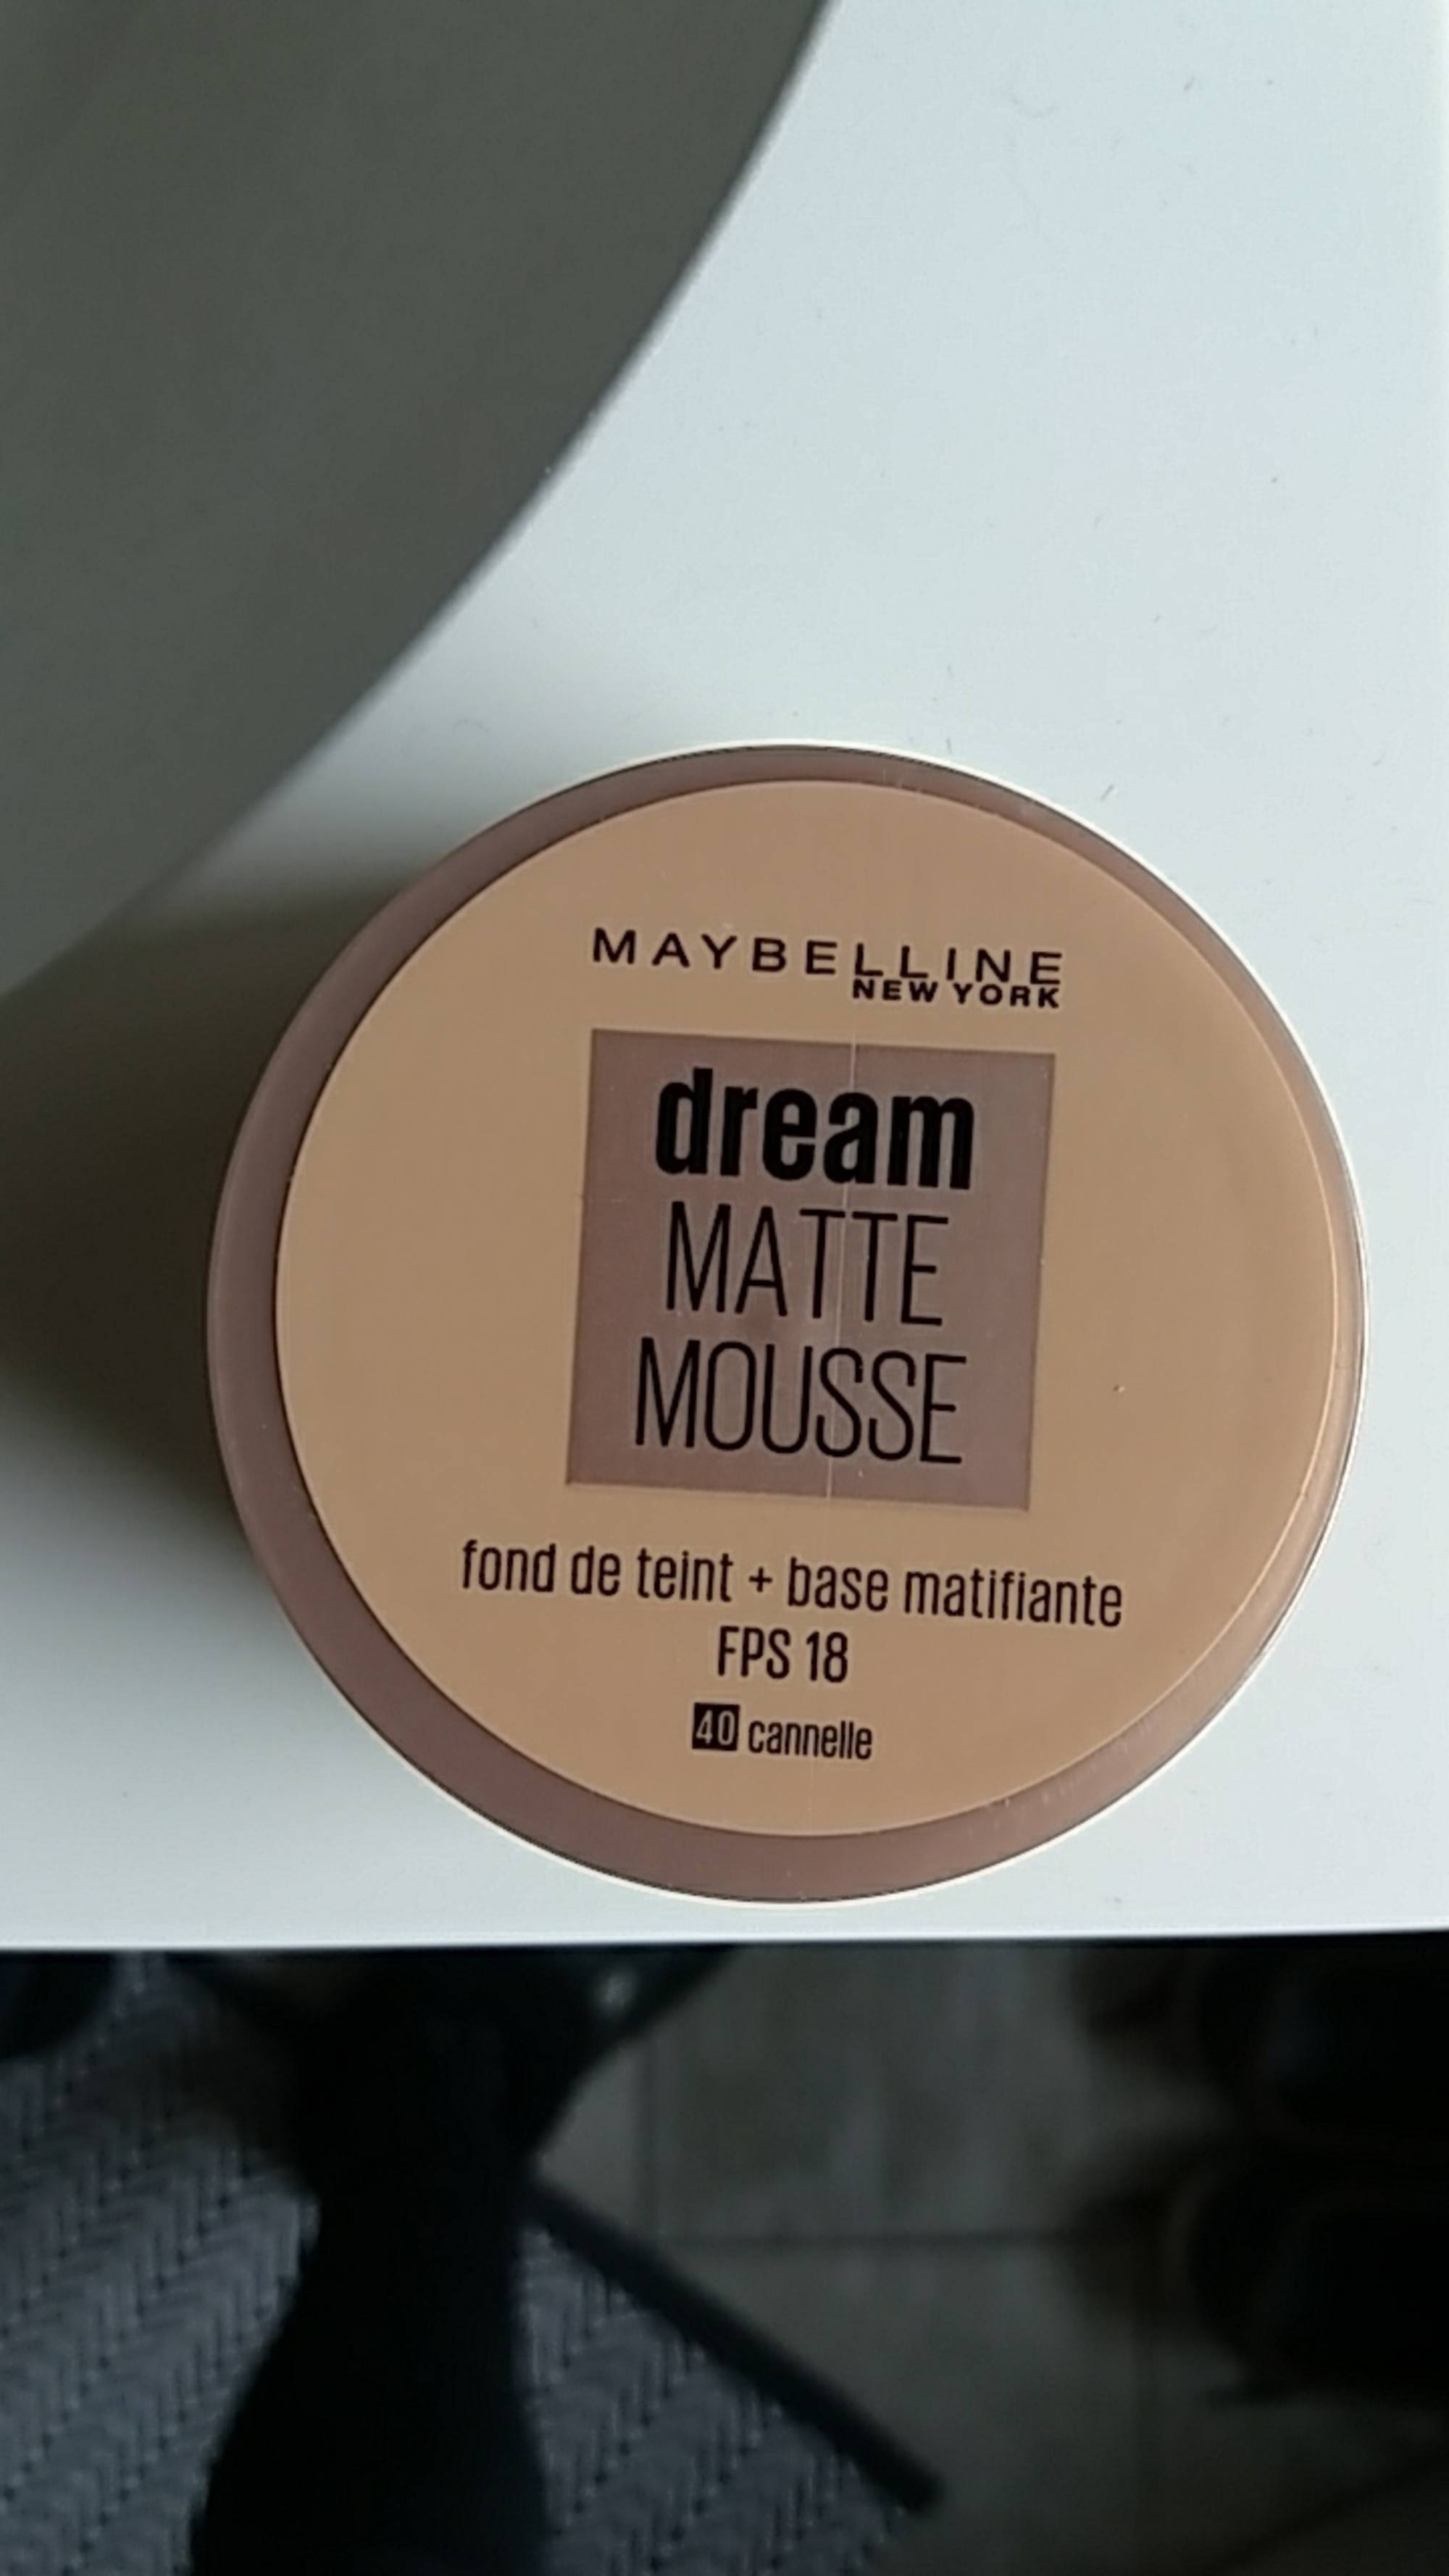 MAYBELLINE - Dream matte mousse - Fond de teint + base matifiante